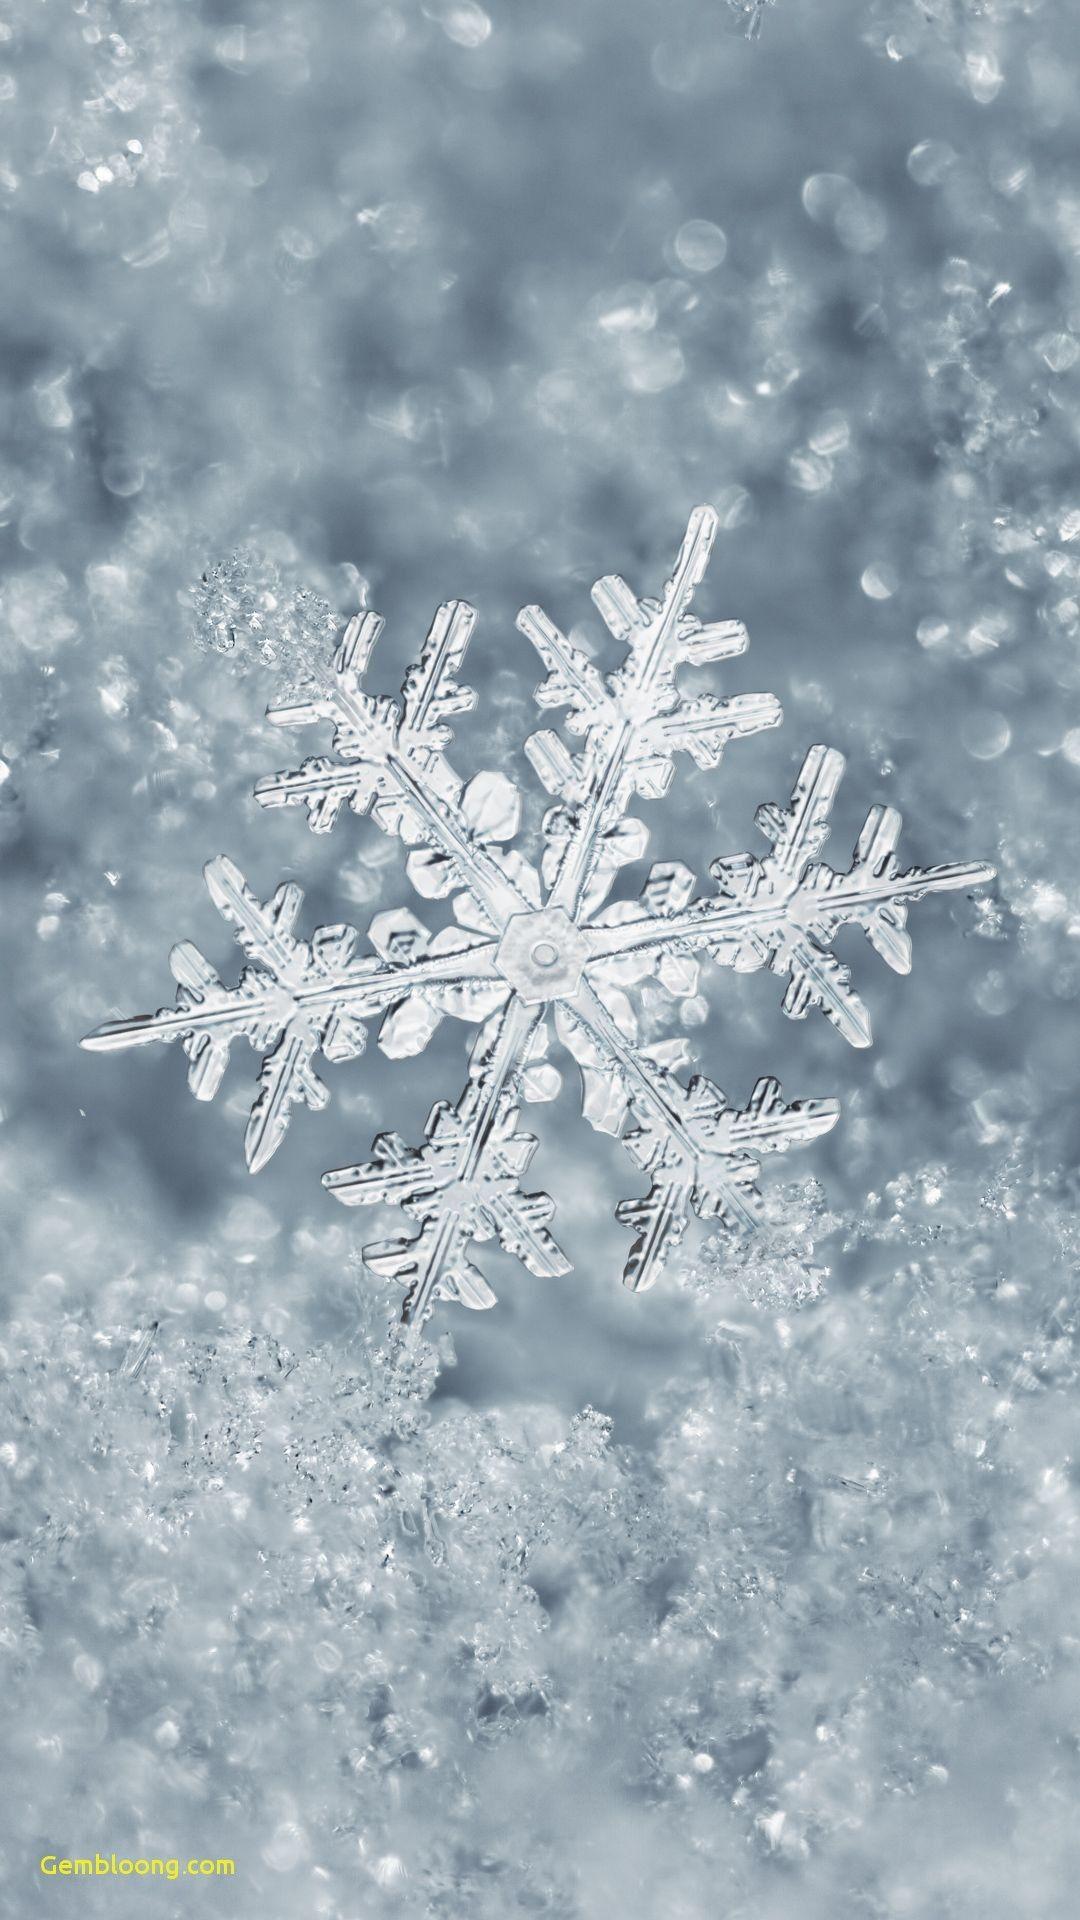 Wallpaper for iPhone Christmas Elegant Ice Snowflake iPhone 7 Plus